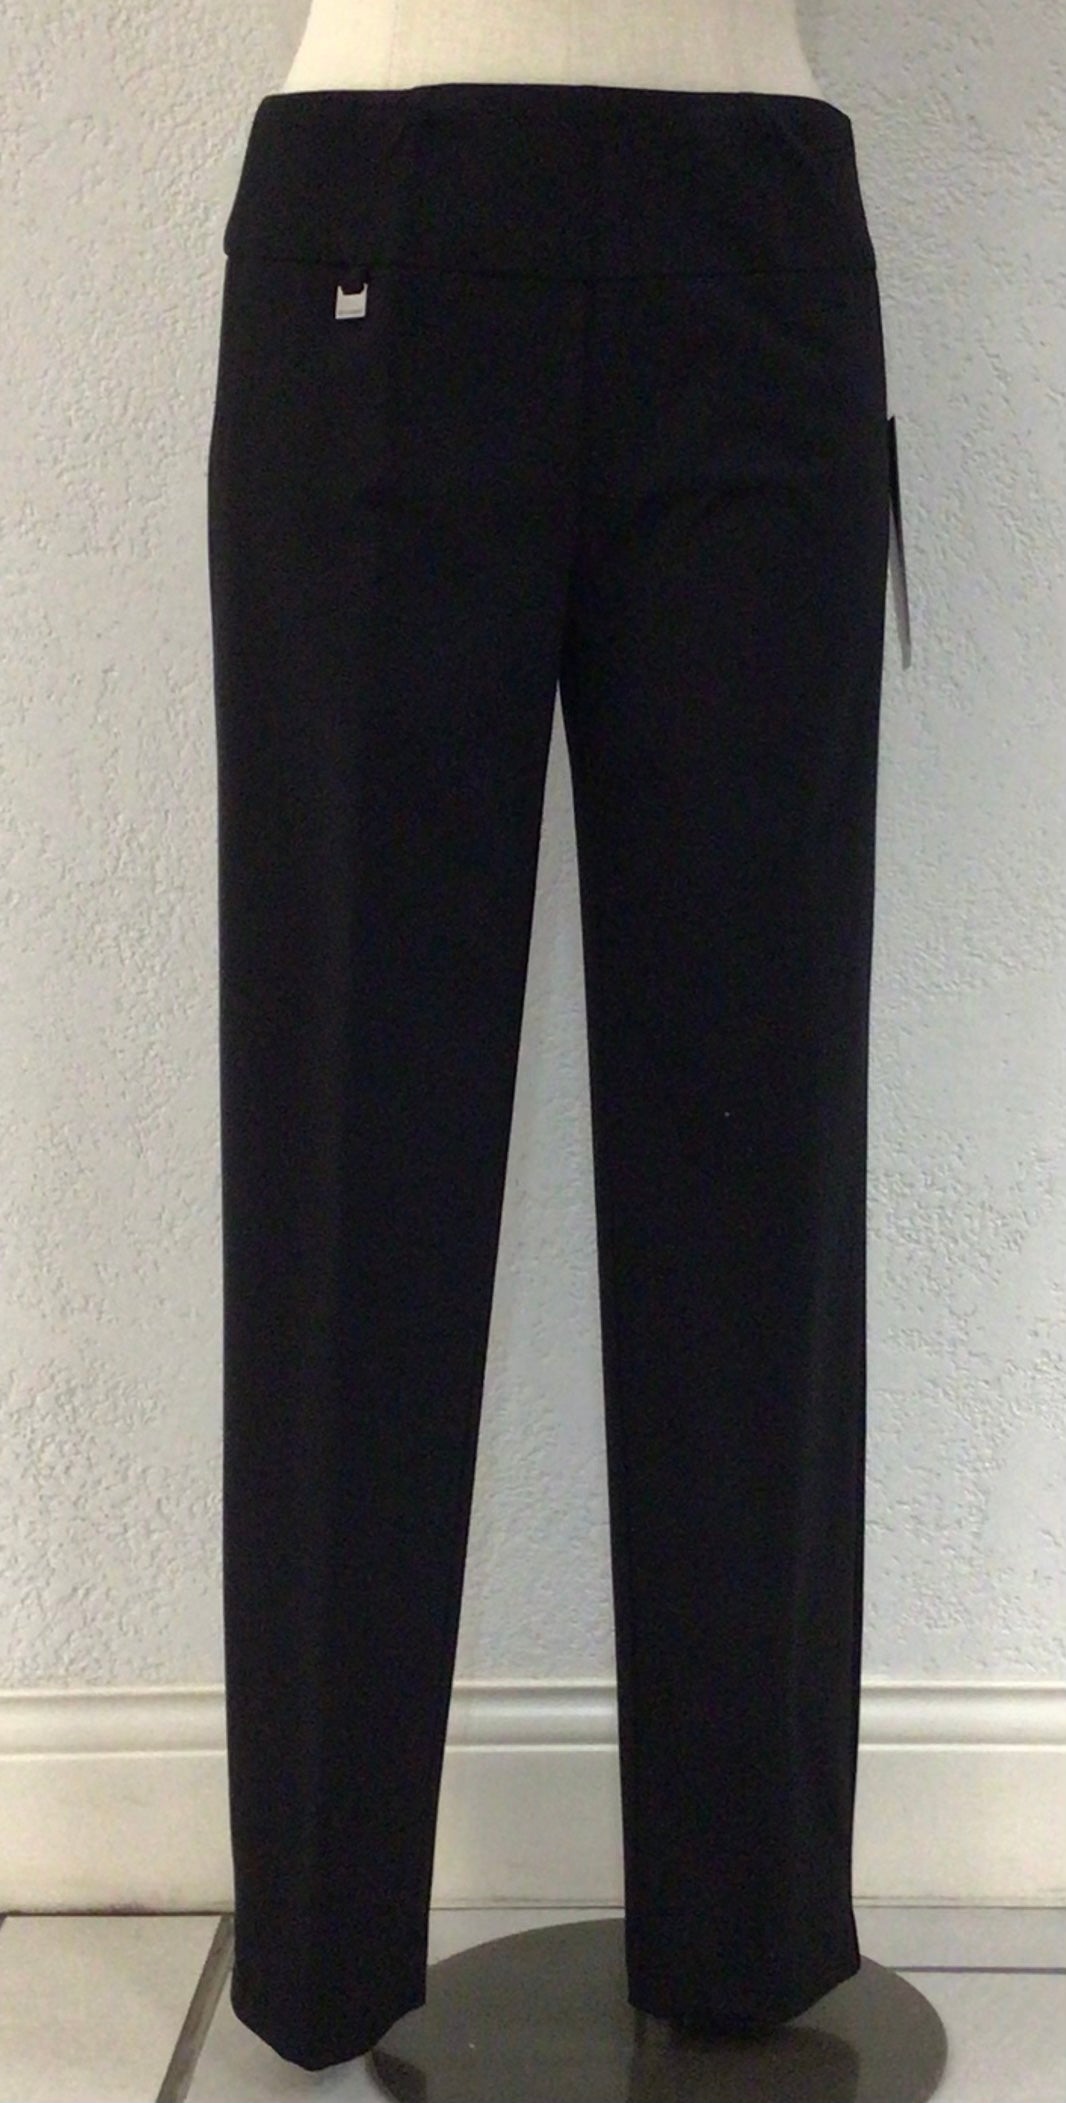 Slimsation Black Ankle Dress Pant M48716PM